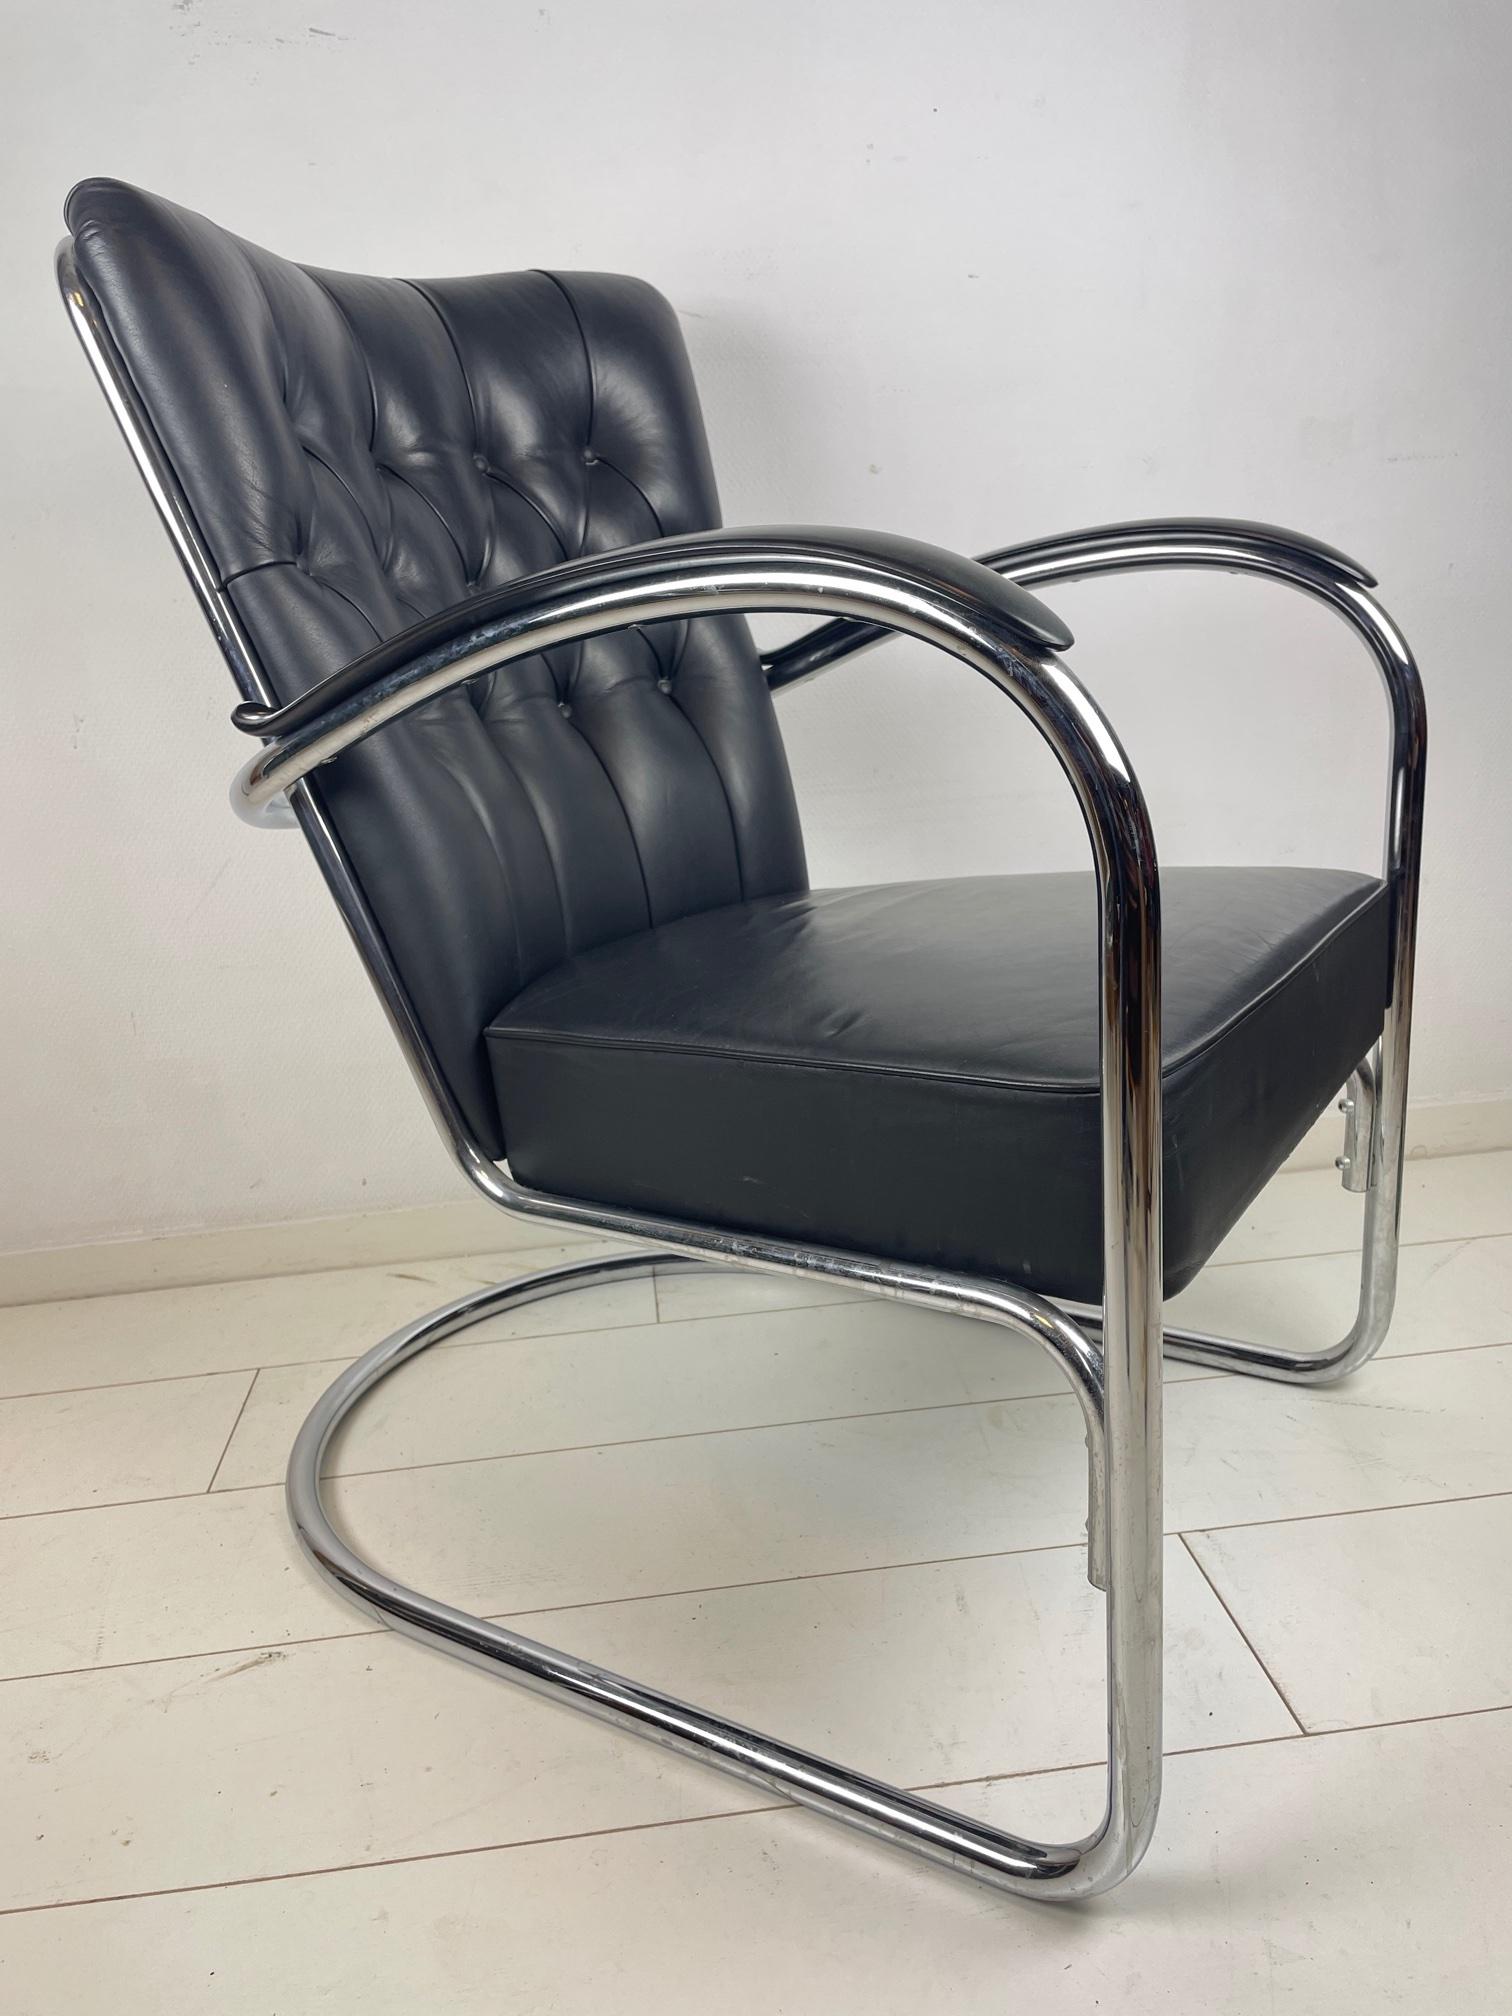 Mid-20th Century Vintage Dutch Design Chair, Gispen 412 GE, Made by Van Der Stroom, Tubular Steel